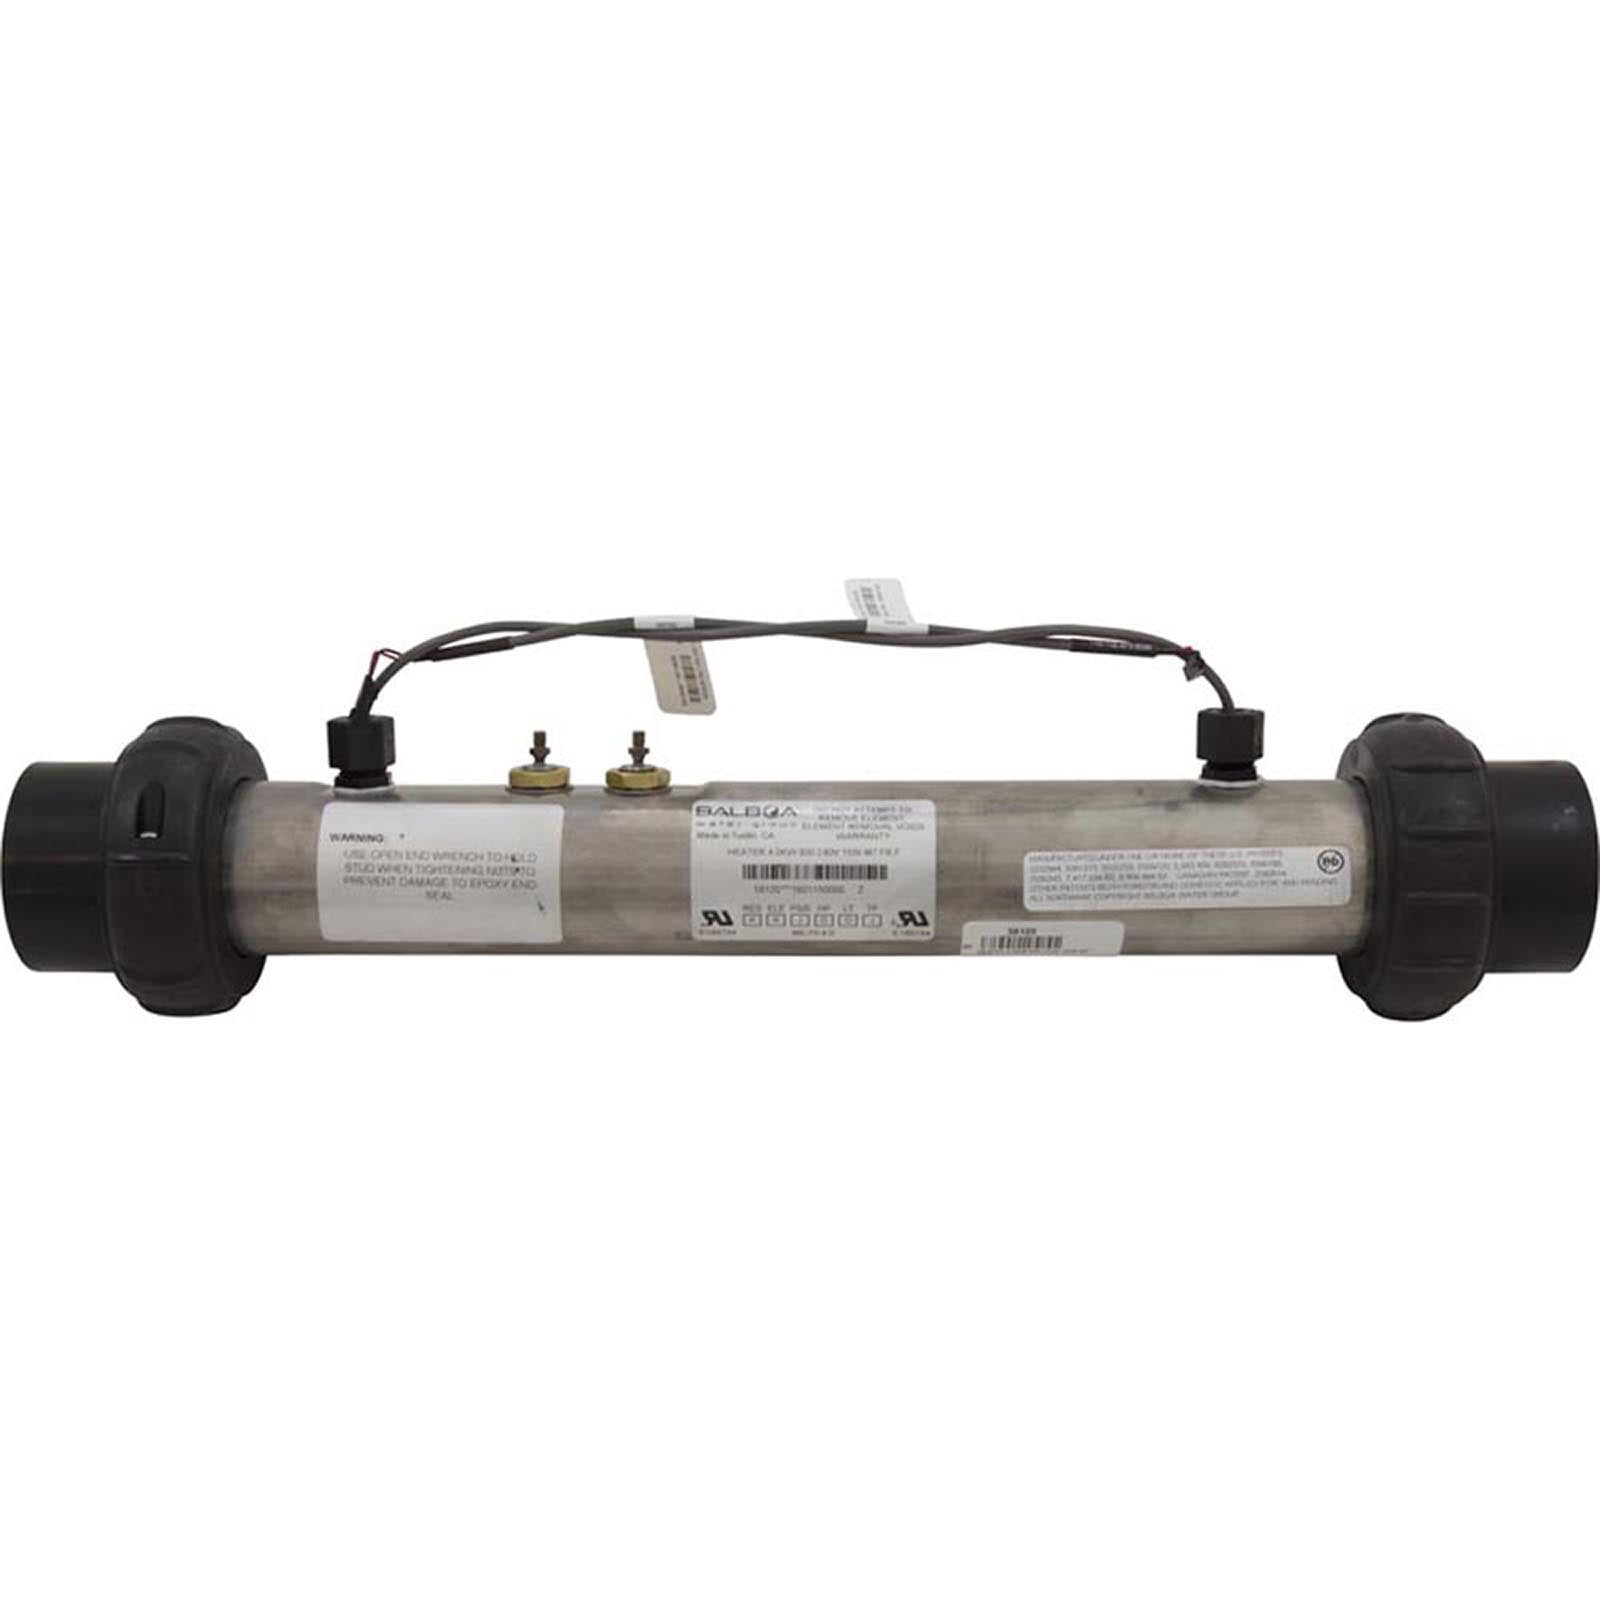 Balboa 4 Kw Heater Tube assembly with sensors PN 58104 